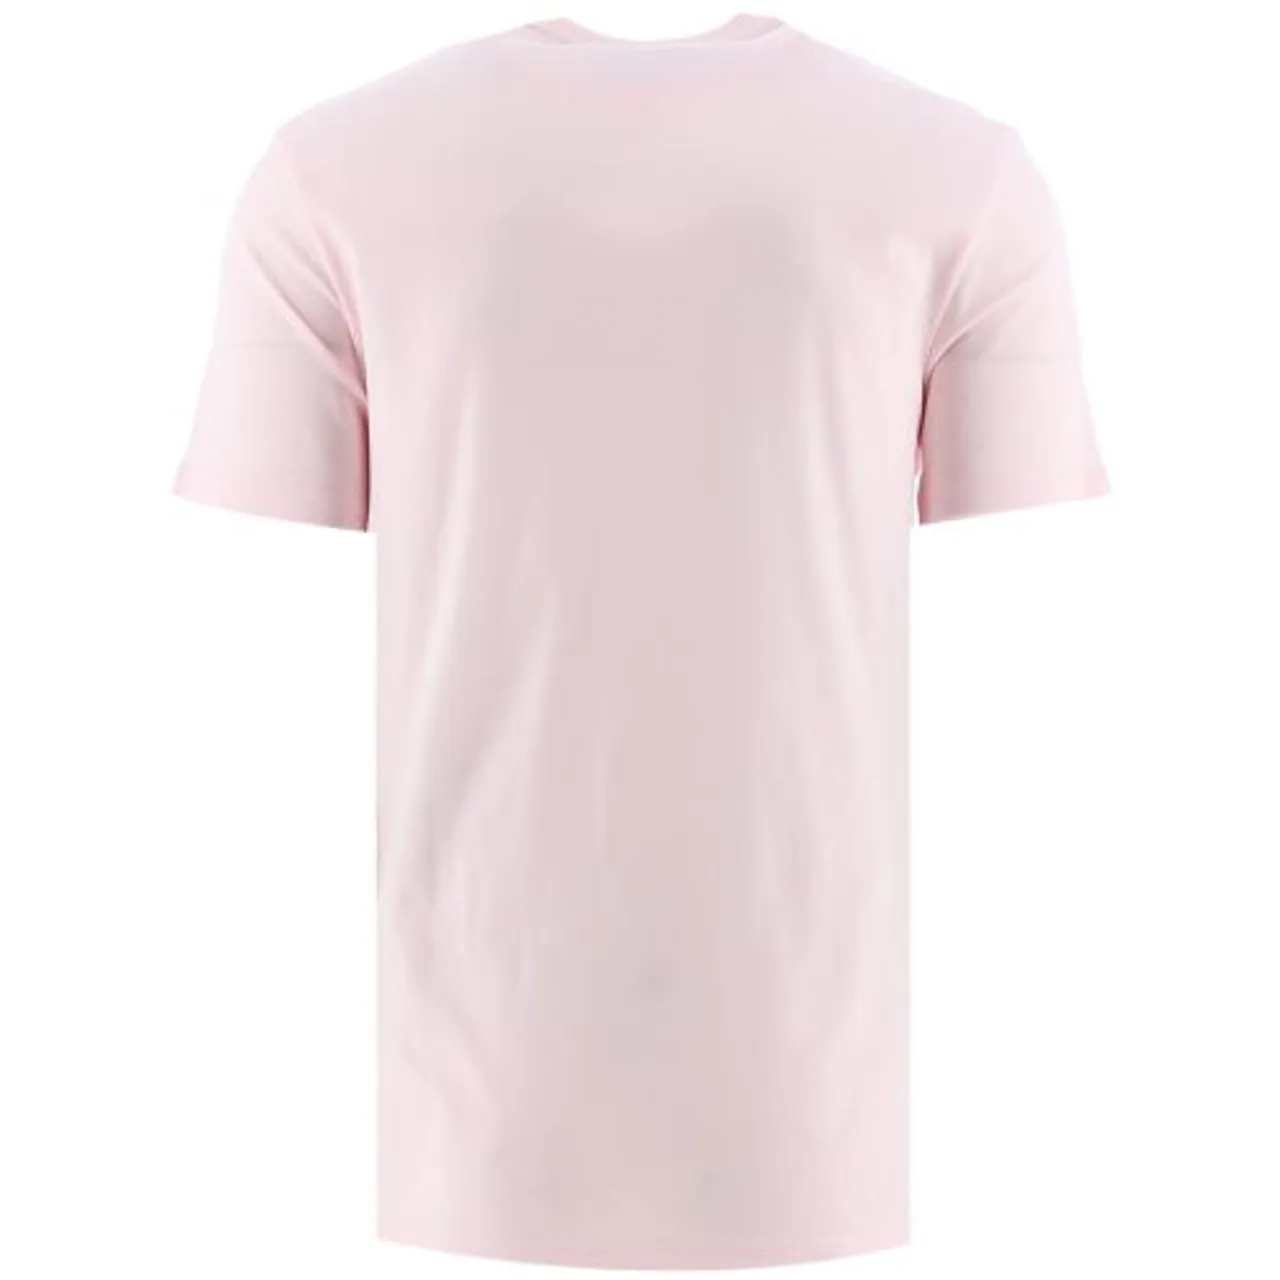 Lyle and Scott Mens Light Pink Plain T-Shirt